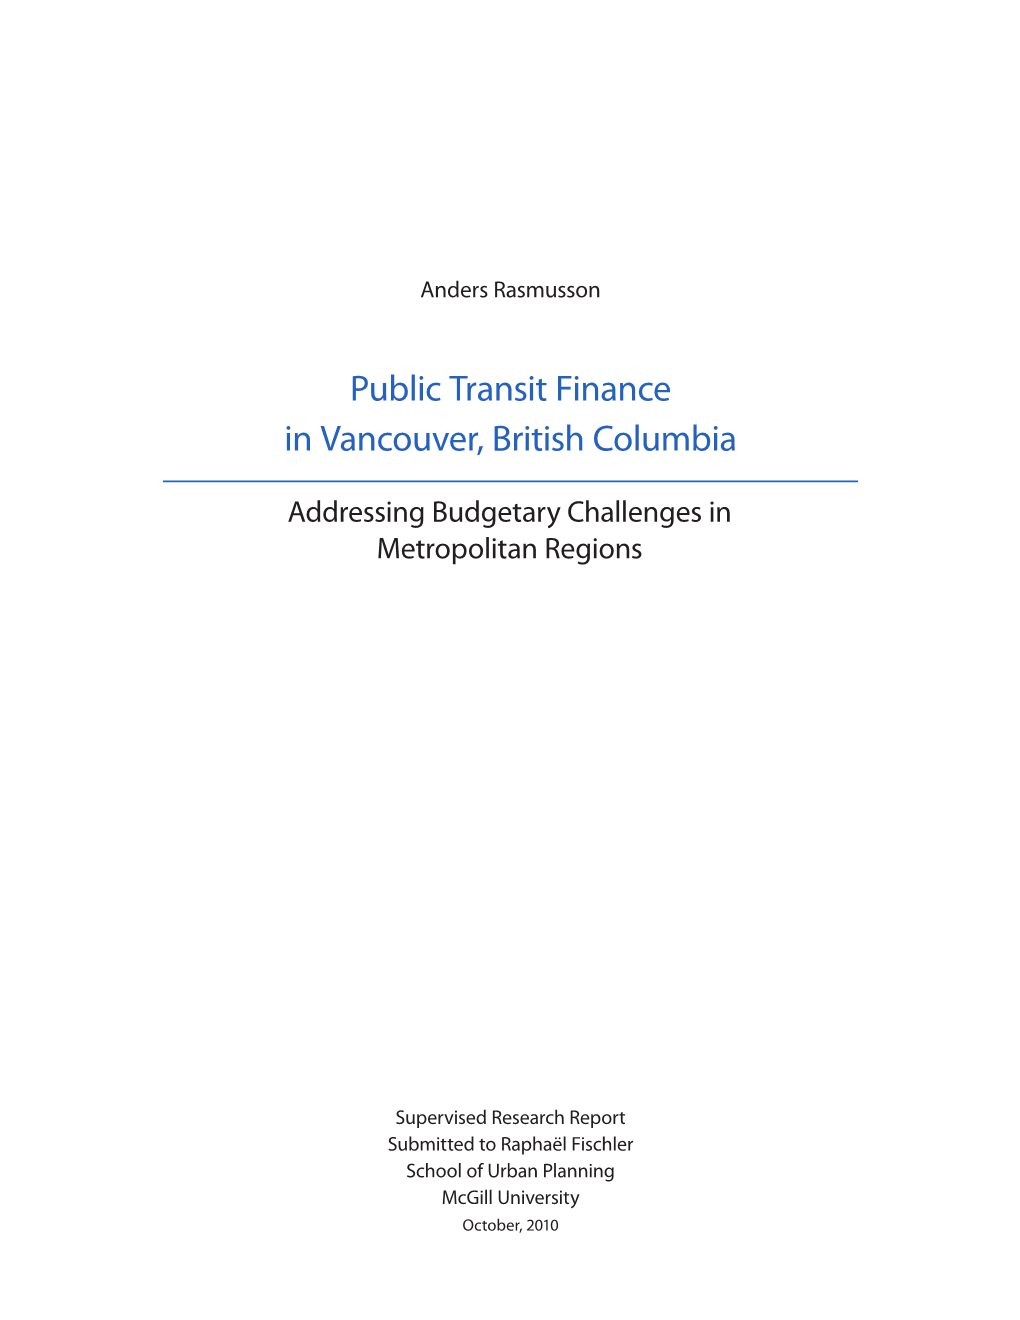 Public Transit Finance in Vancouver, British Columbia